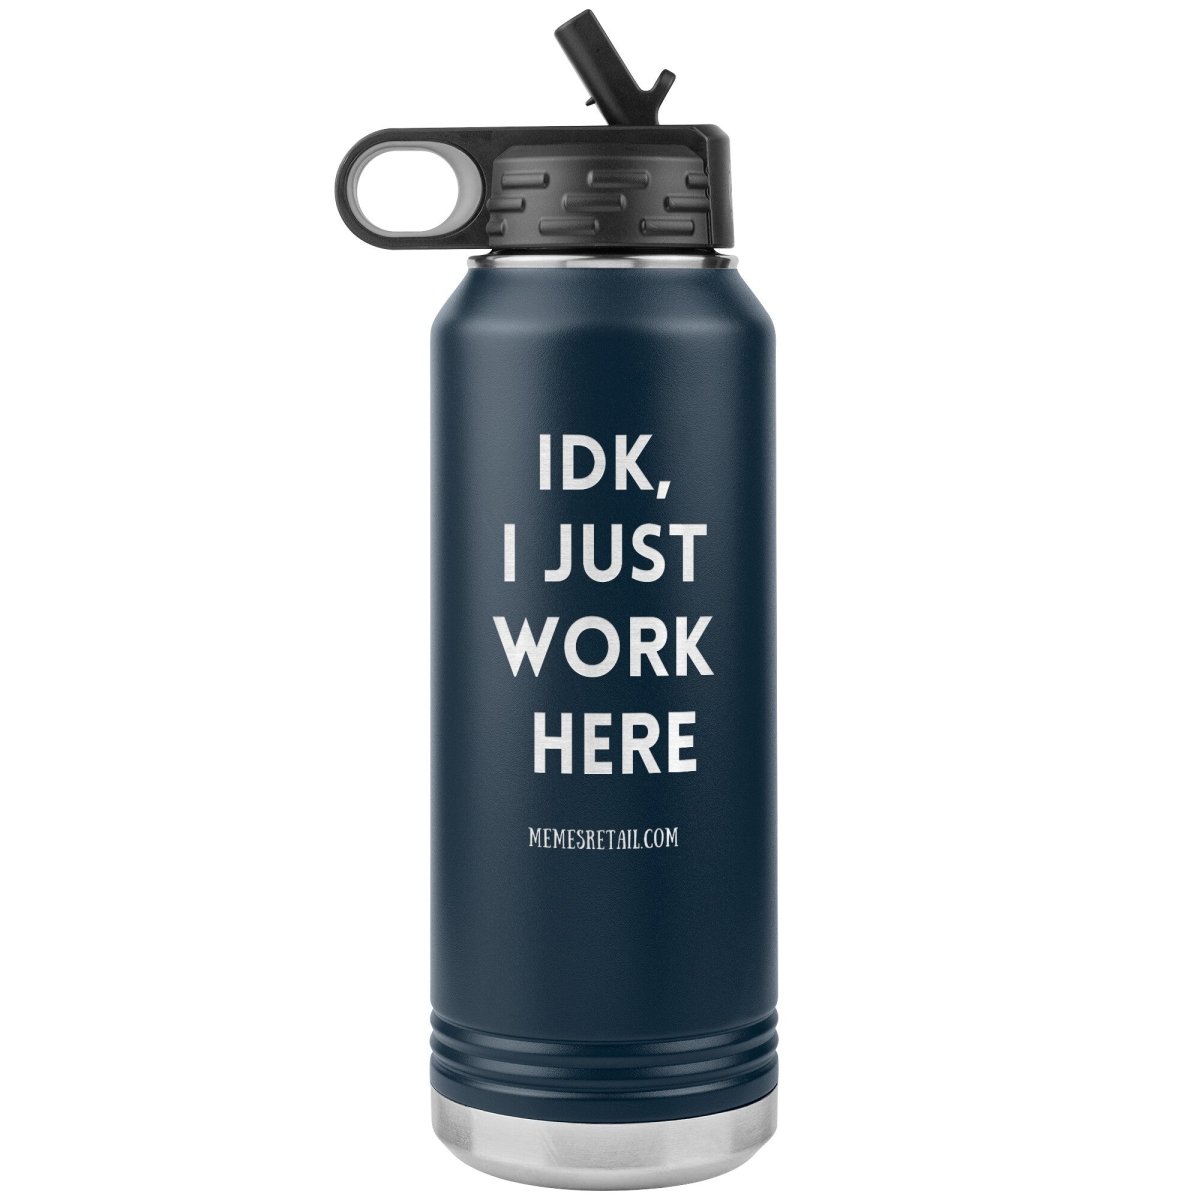 IDK, I Just Work Here 32 oz Stainless Steel Water Bottle Tumbler, Navy - MemesRetail.com